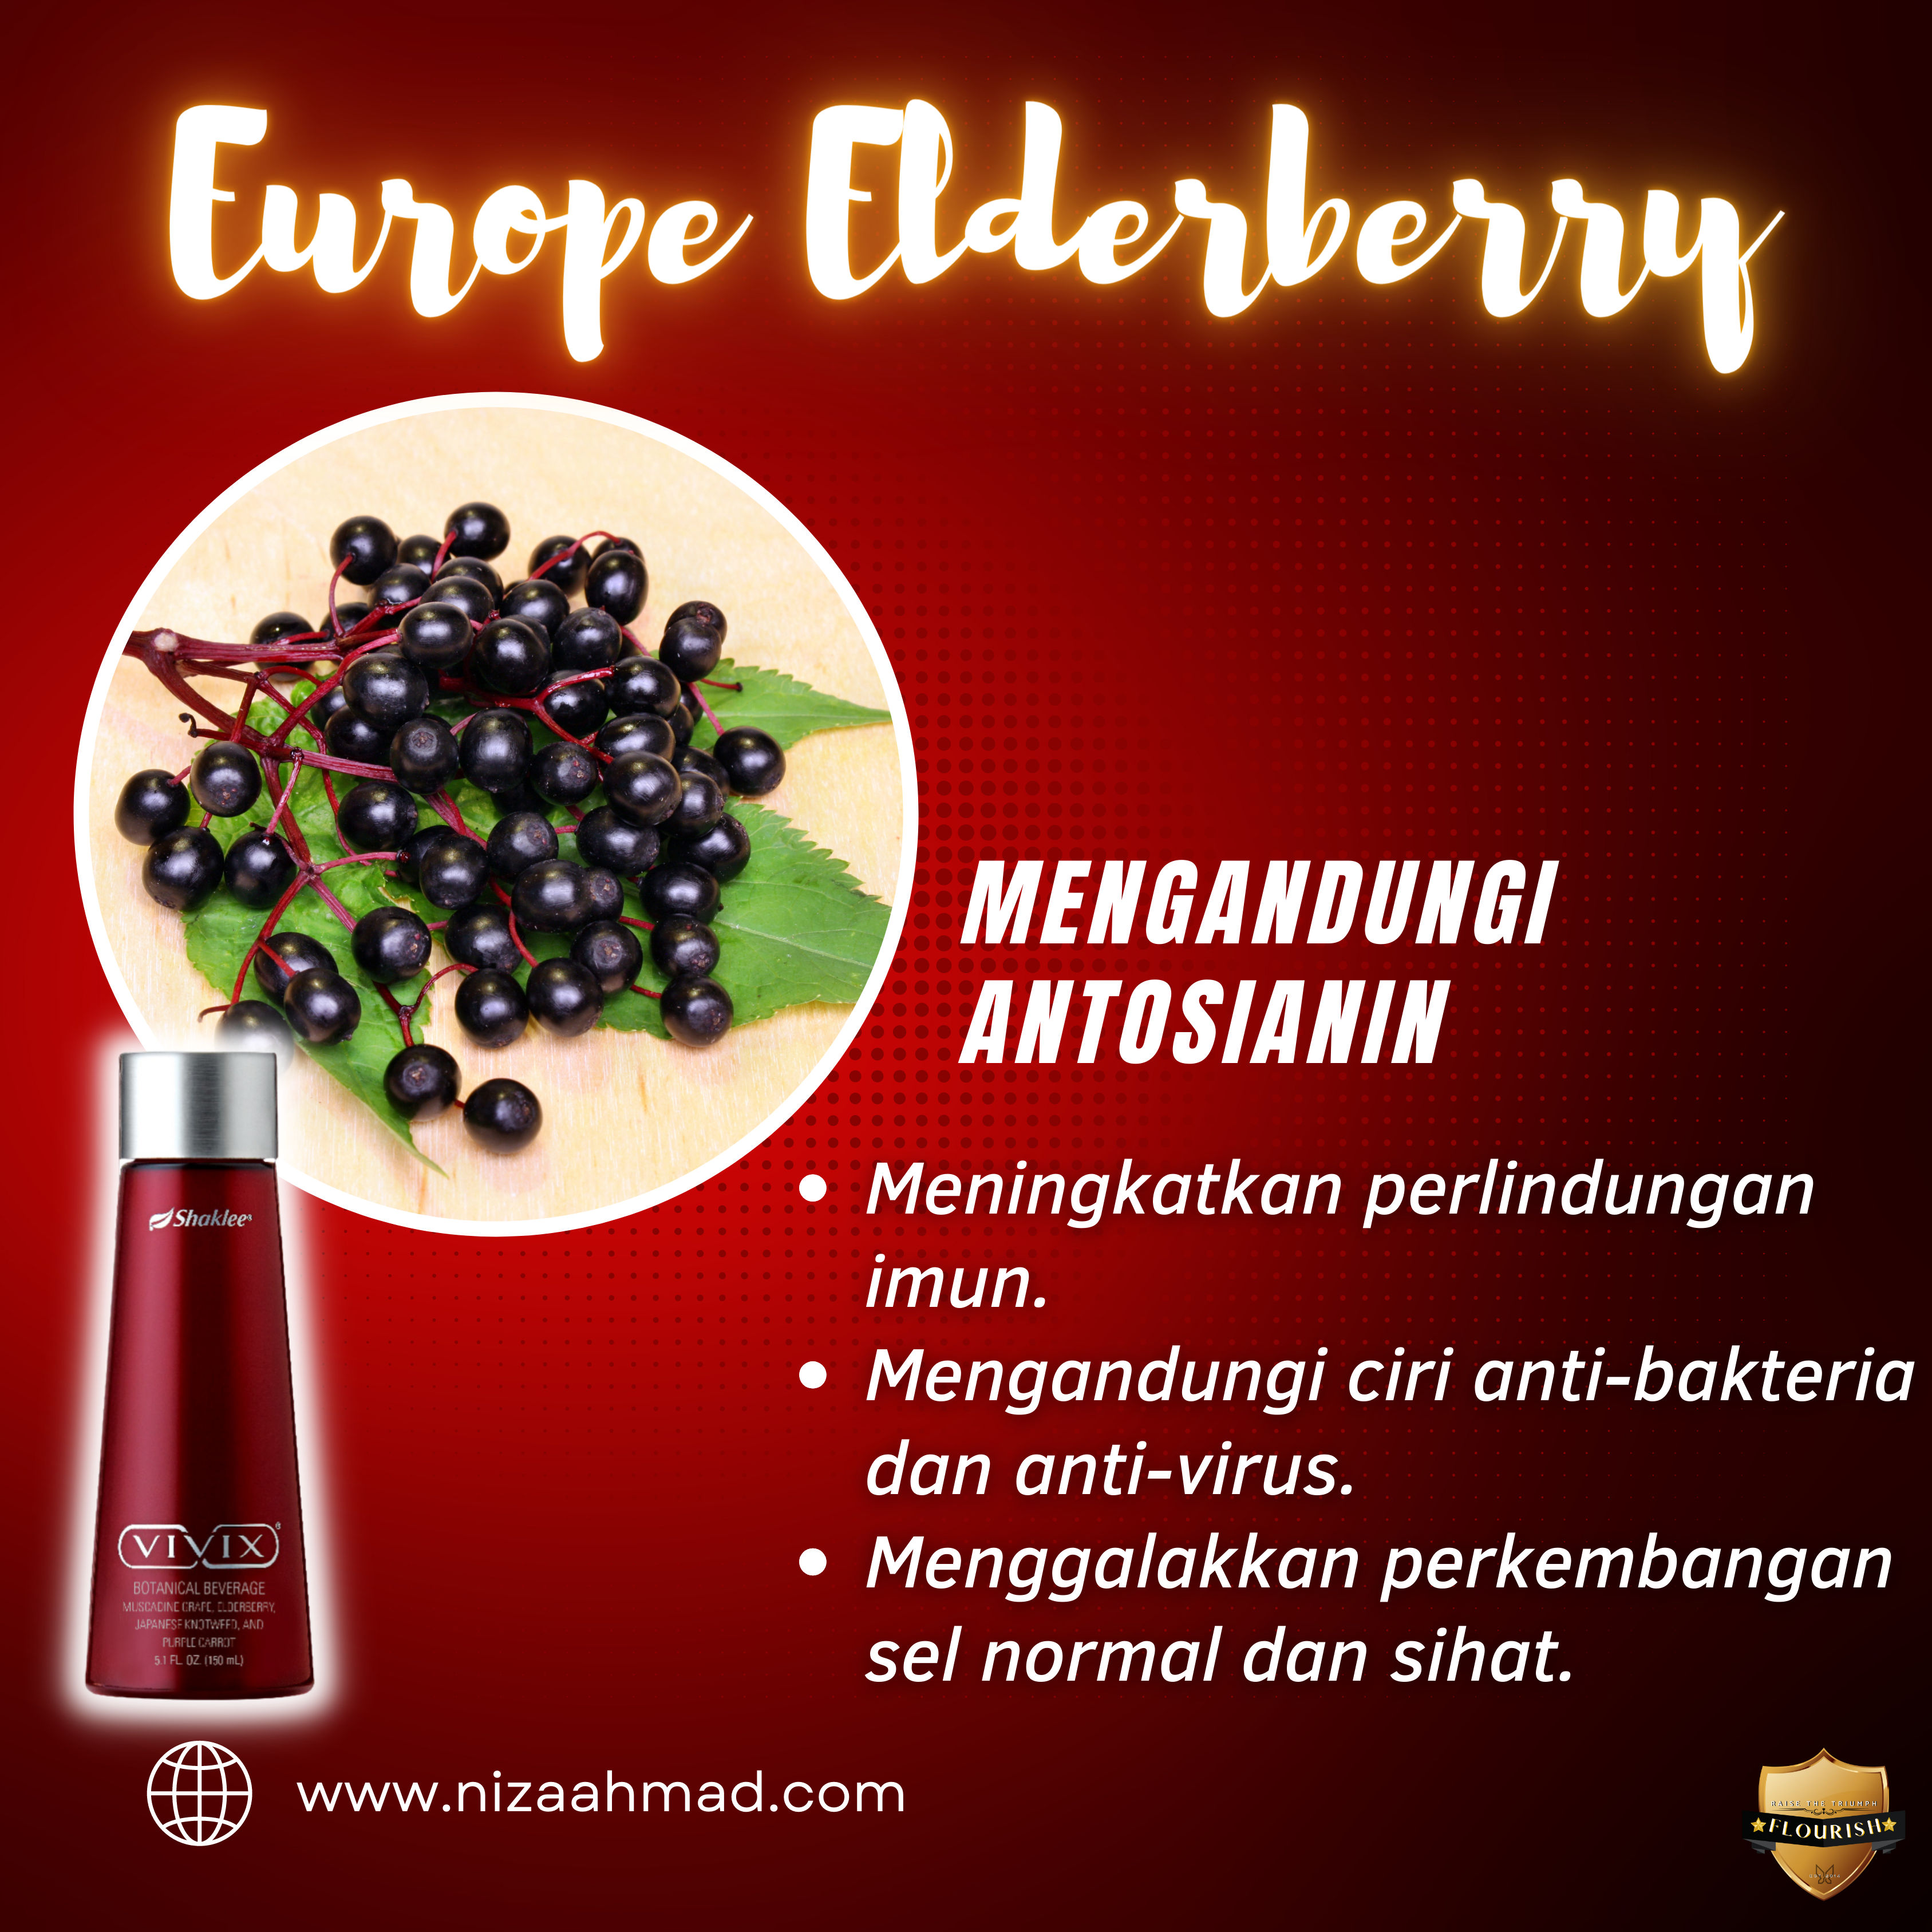 Elderberry eropah